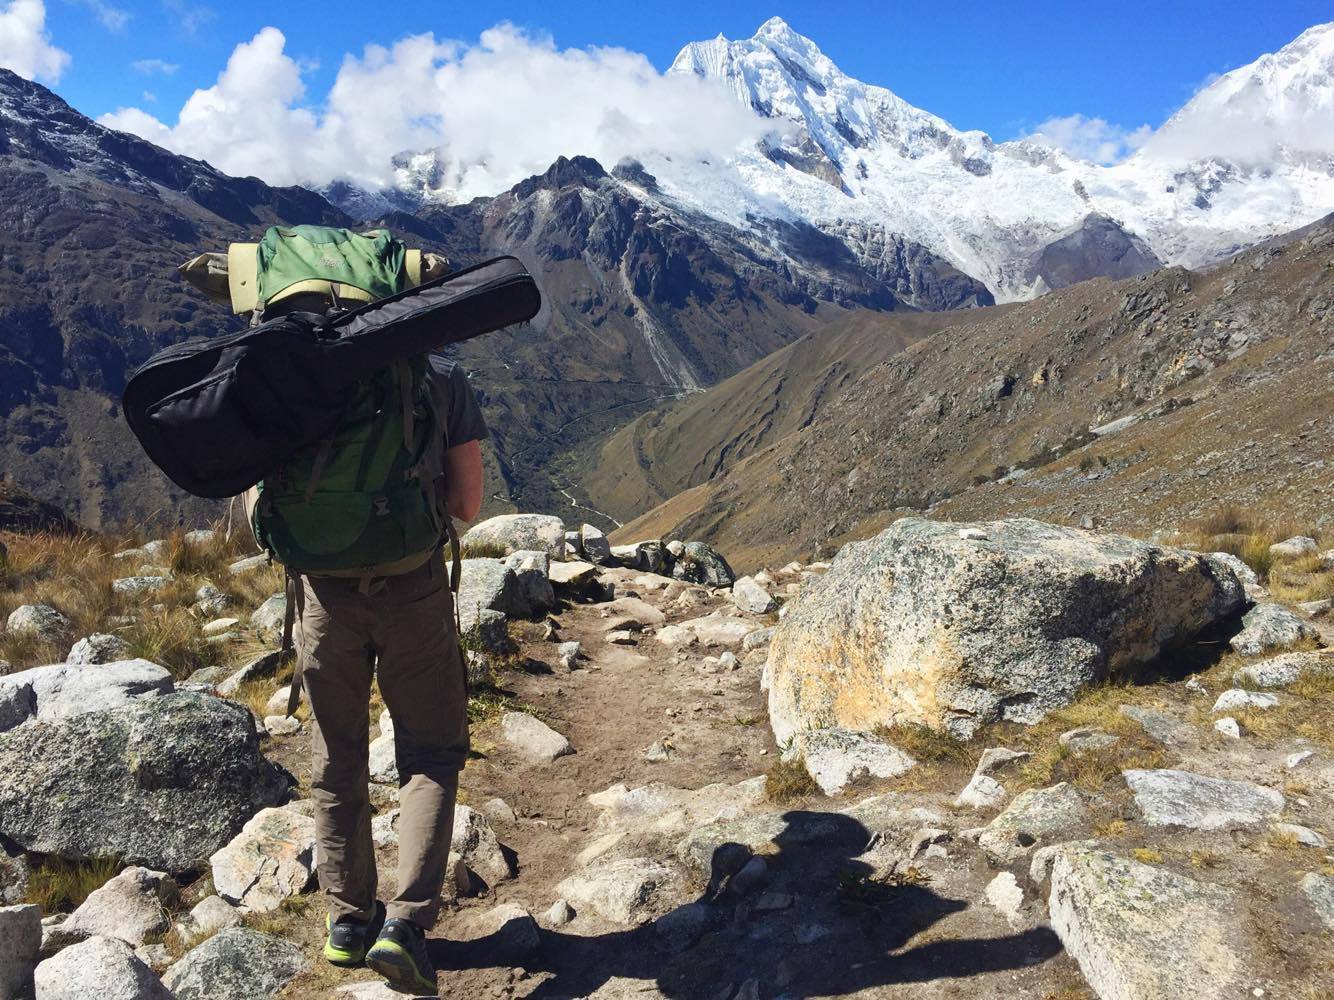 Climbing Peru's Cordillera Blanca Mountains